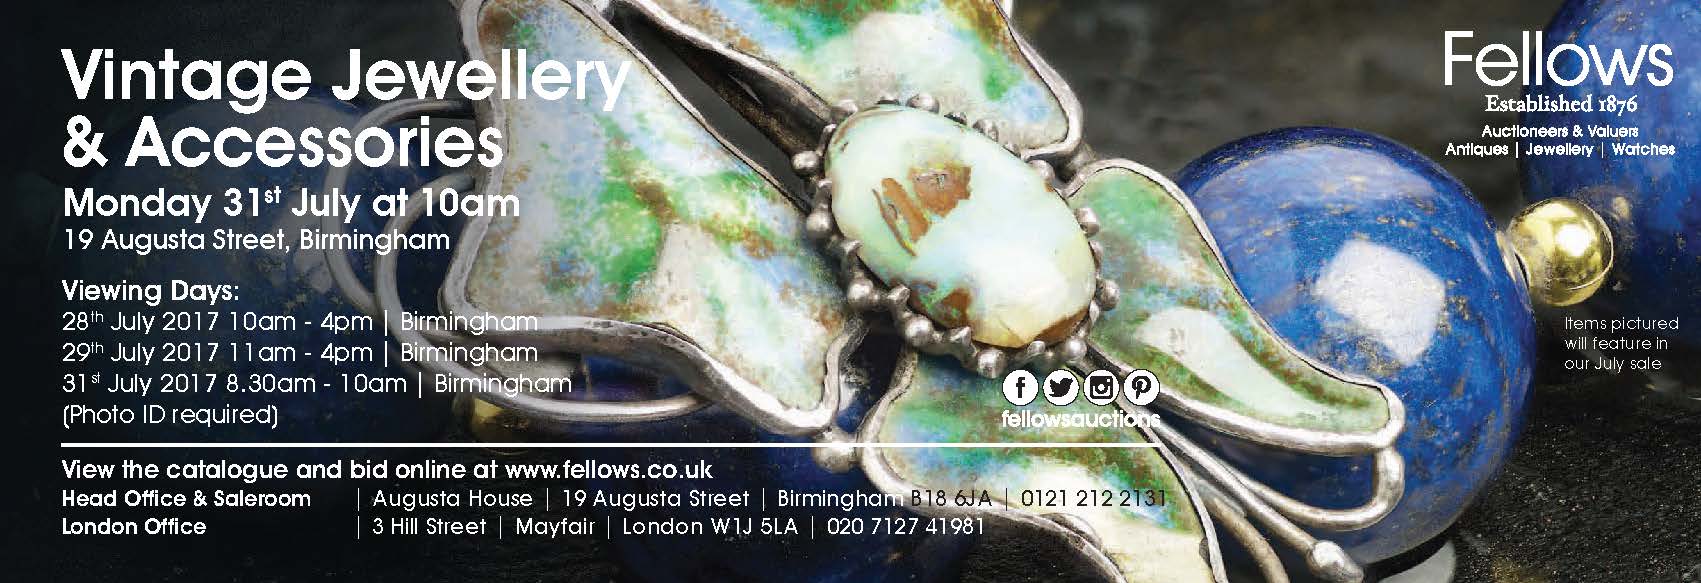 Fellows - Vintage Jewellery & Accessories.jpg